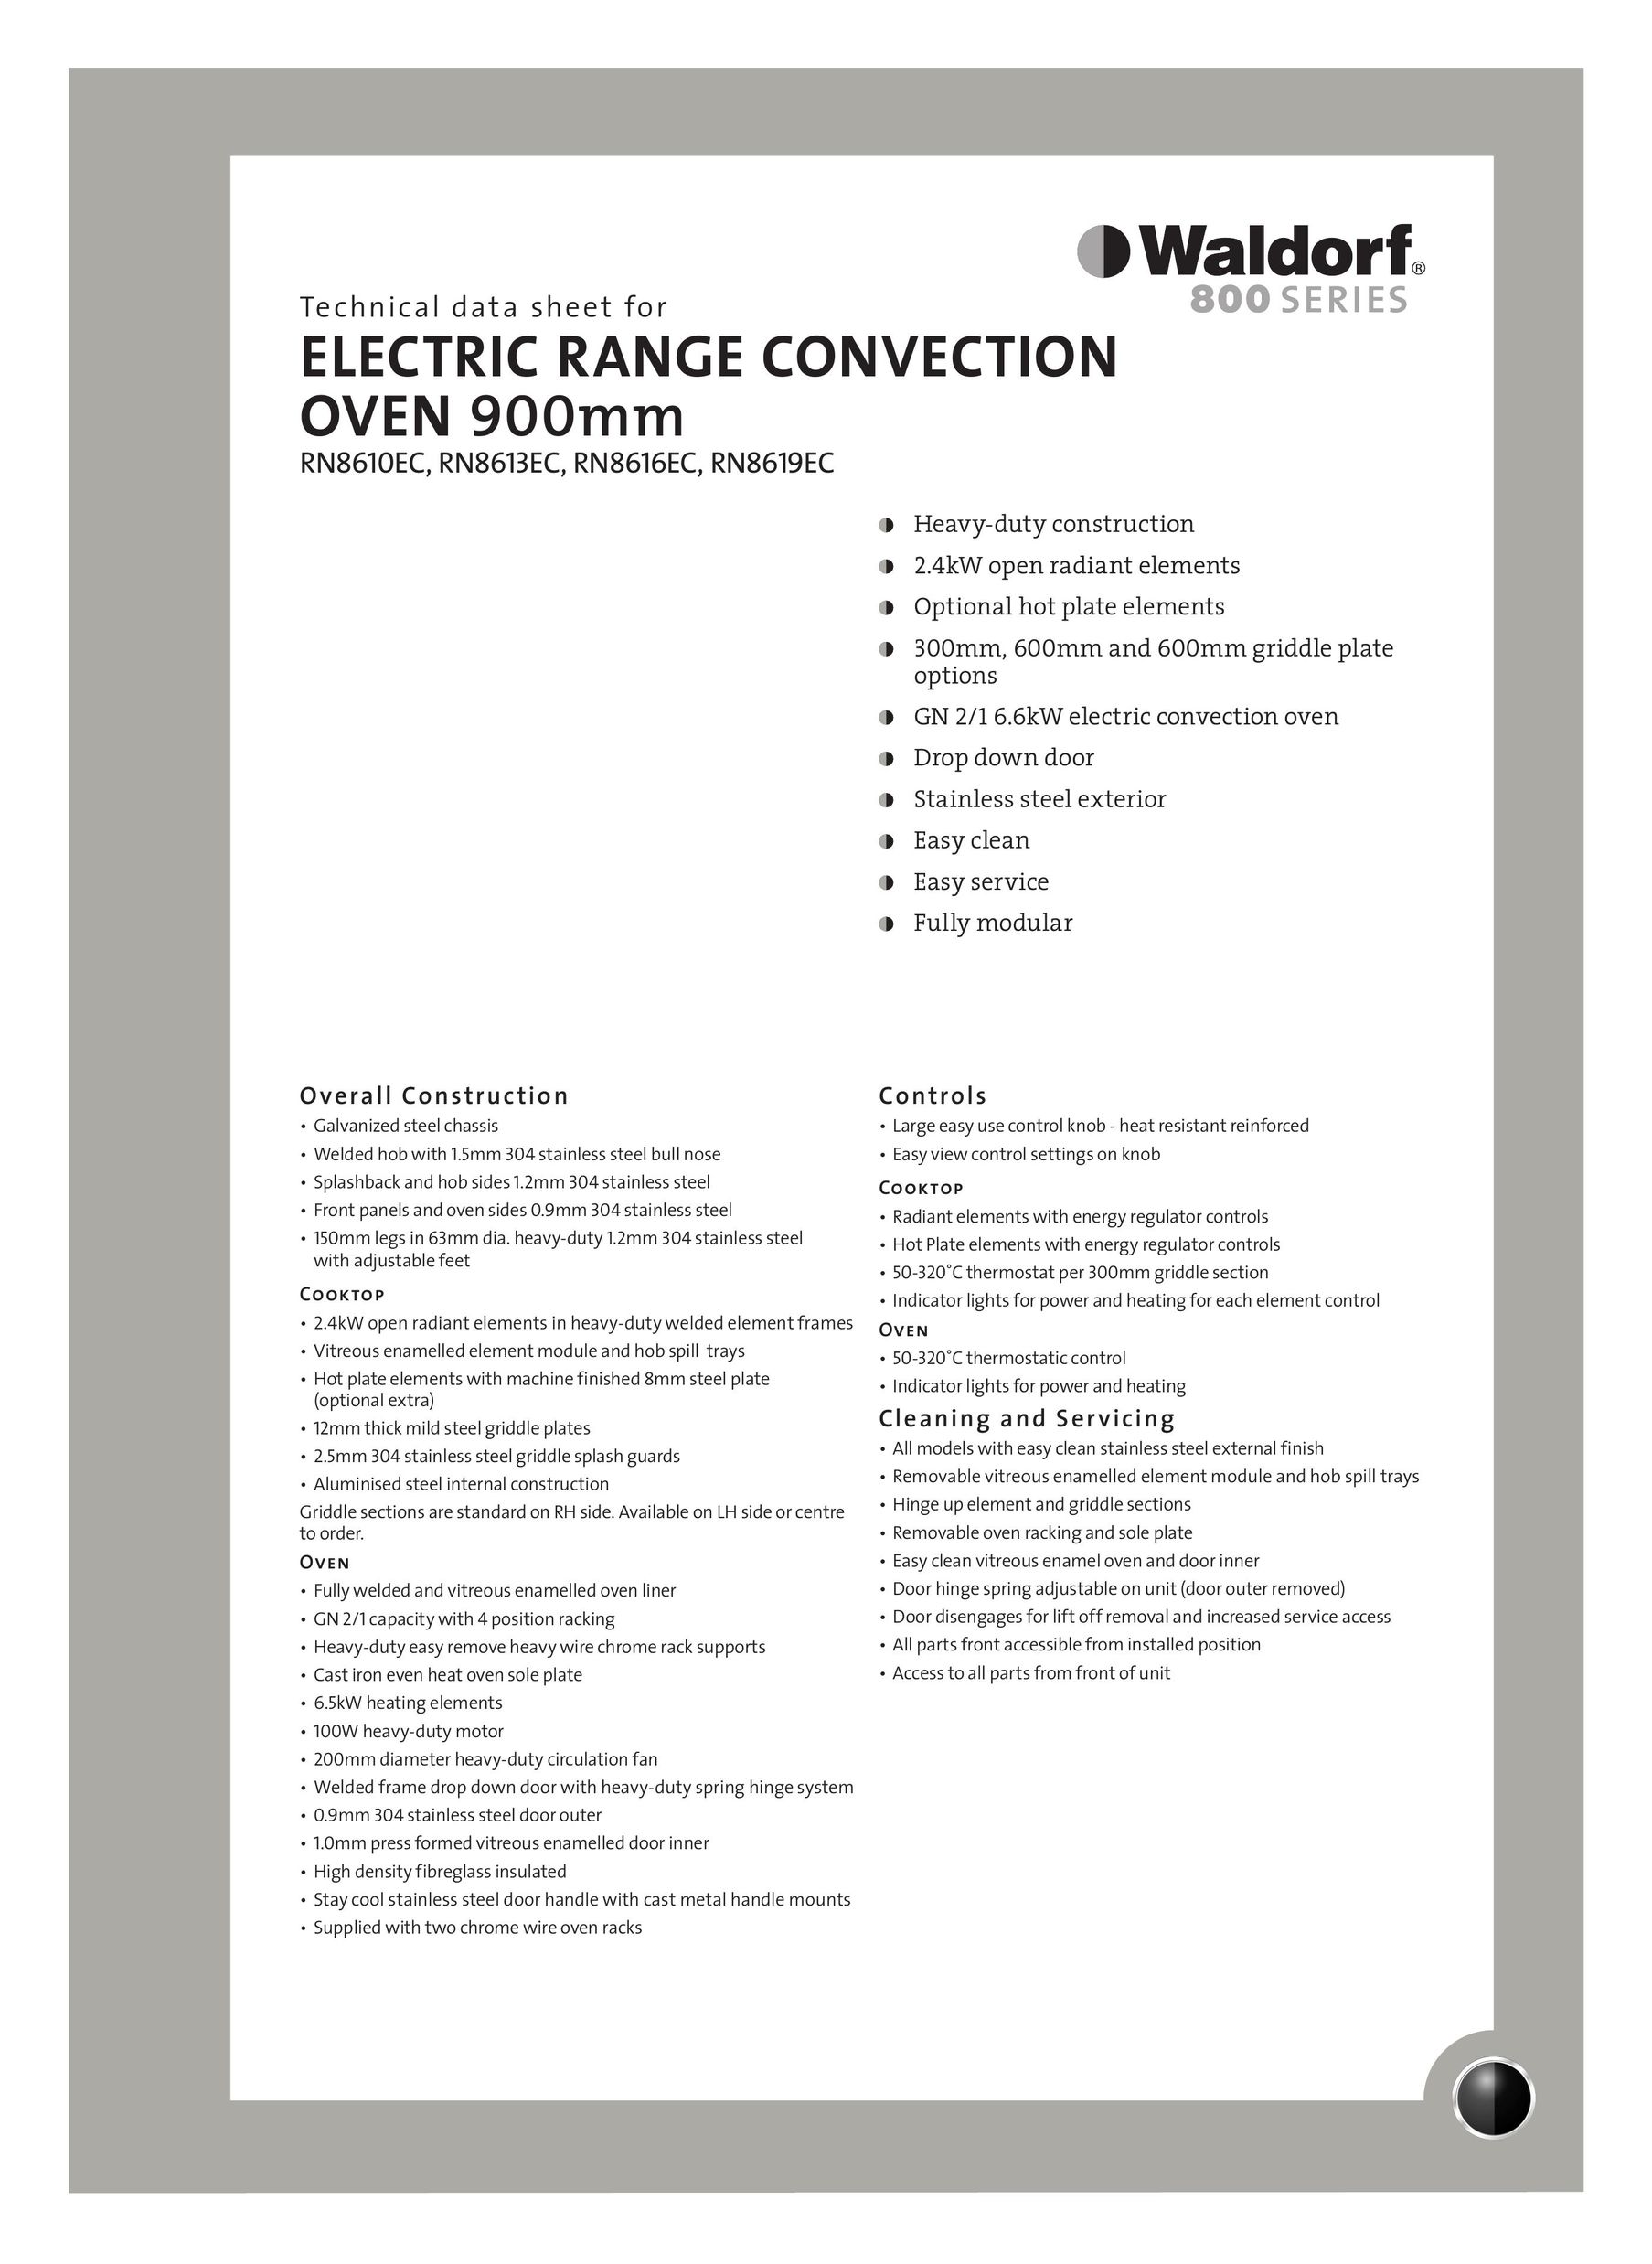 Moffat RN8610EC Oven User Manual